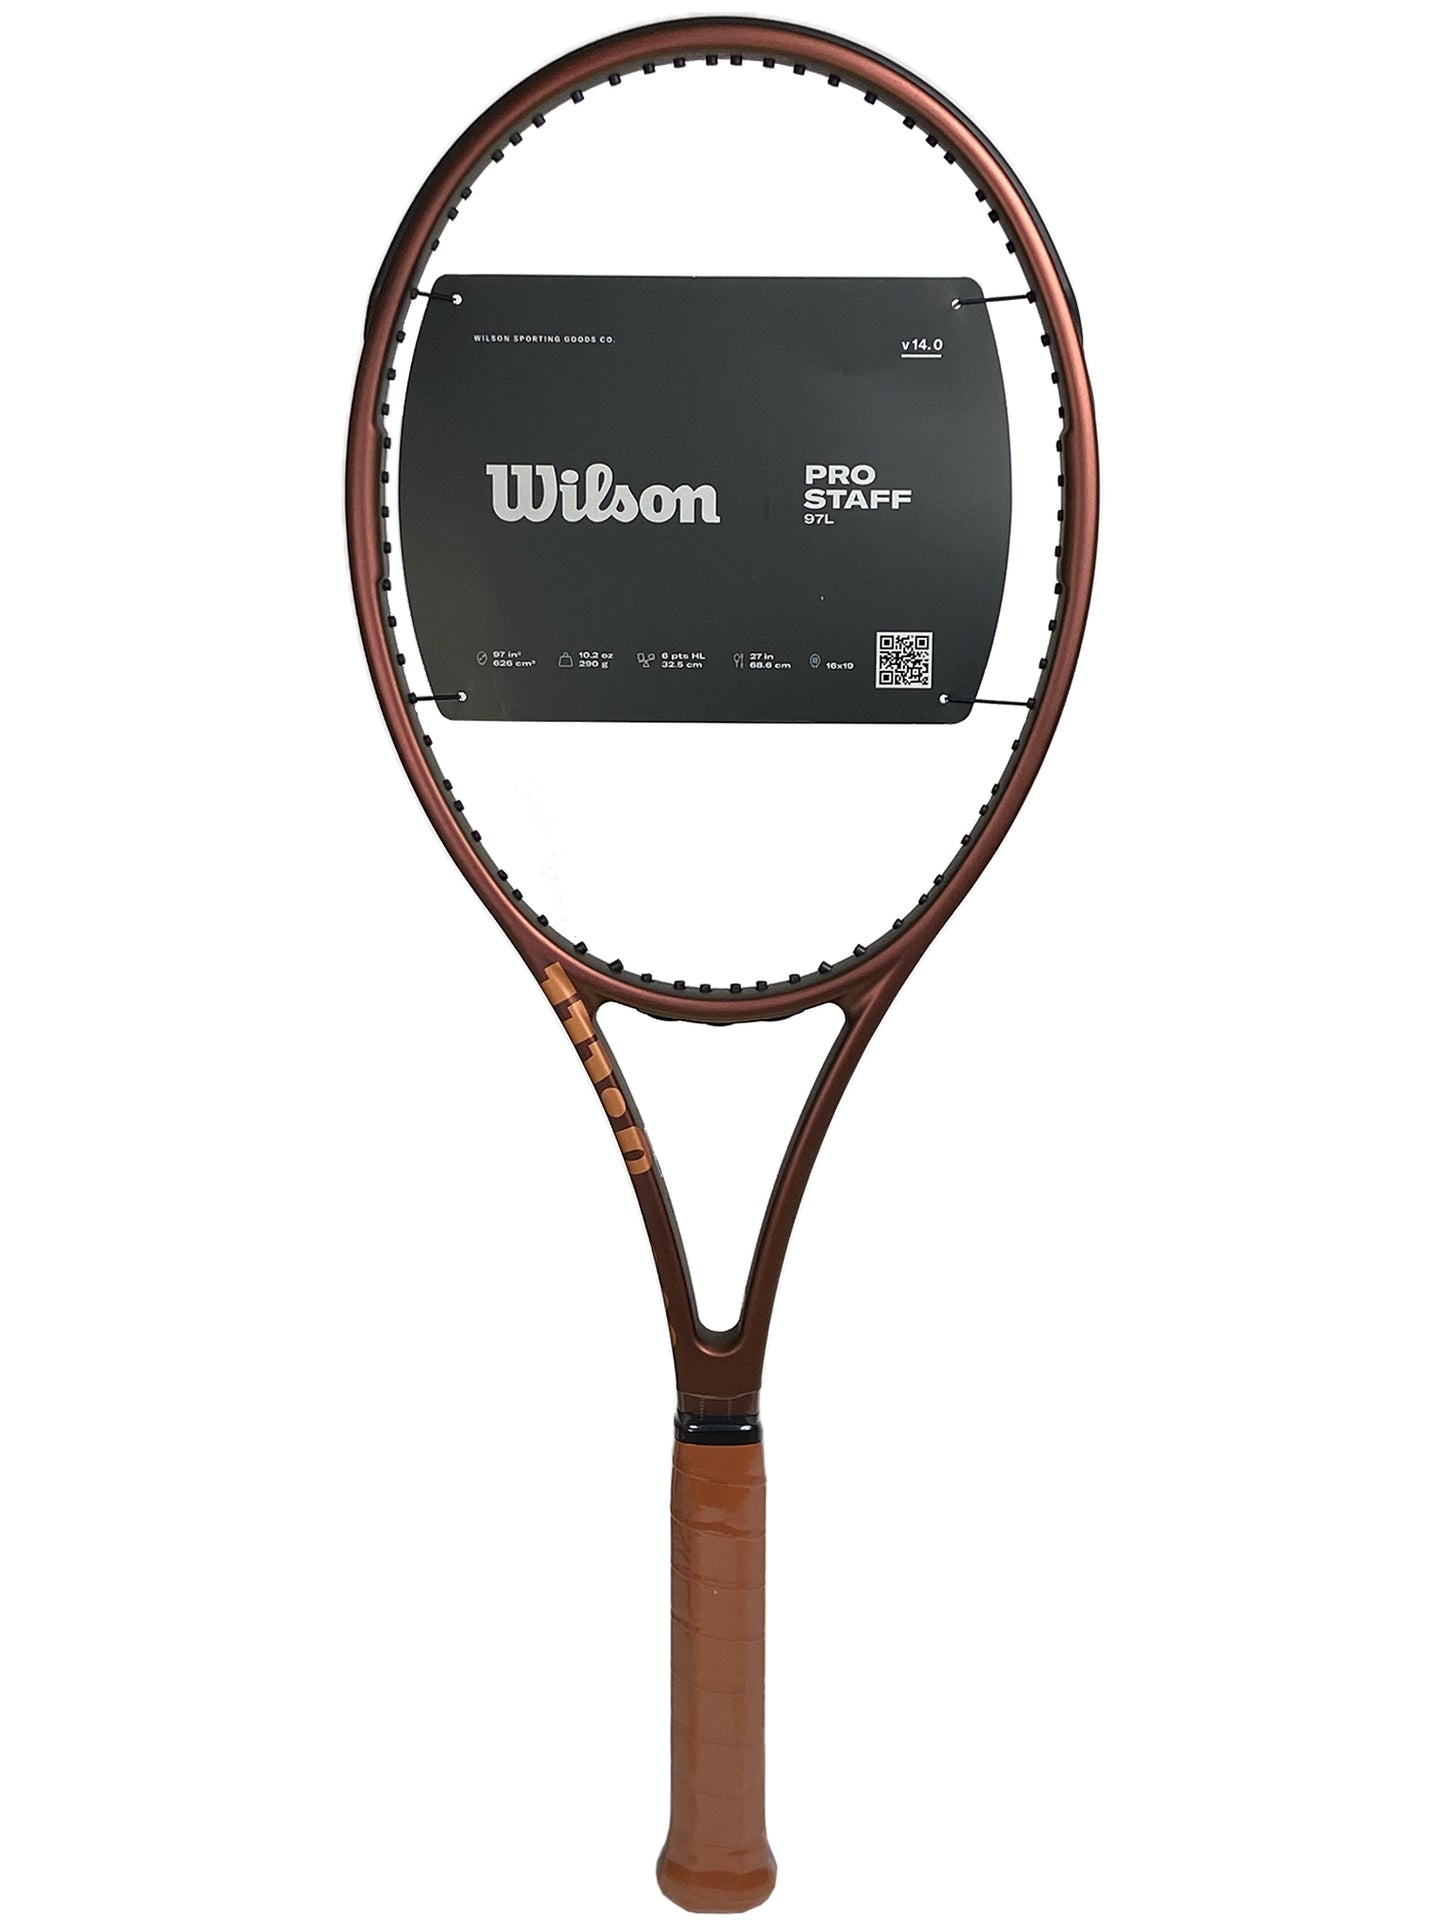 NICE CHOOSE Badminton Racket Stringing Machine, 60LB Qatar